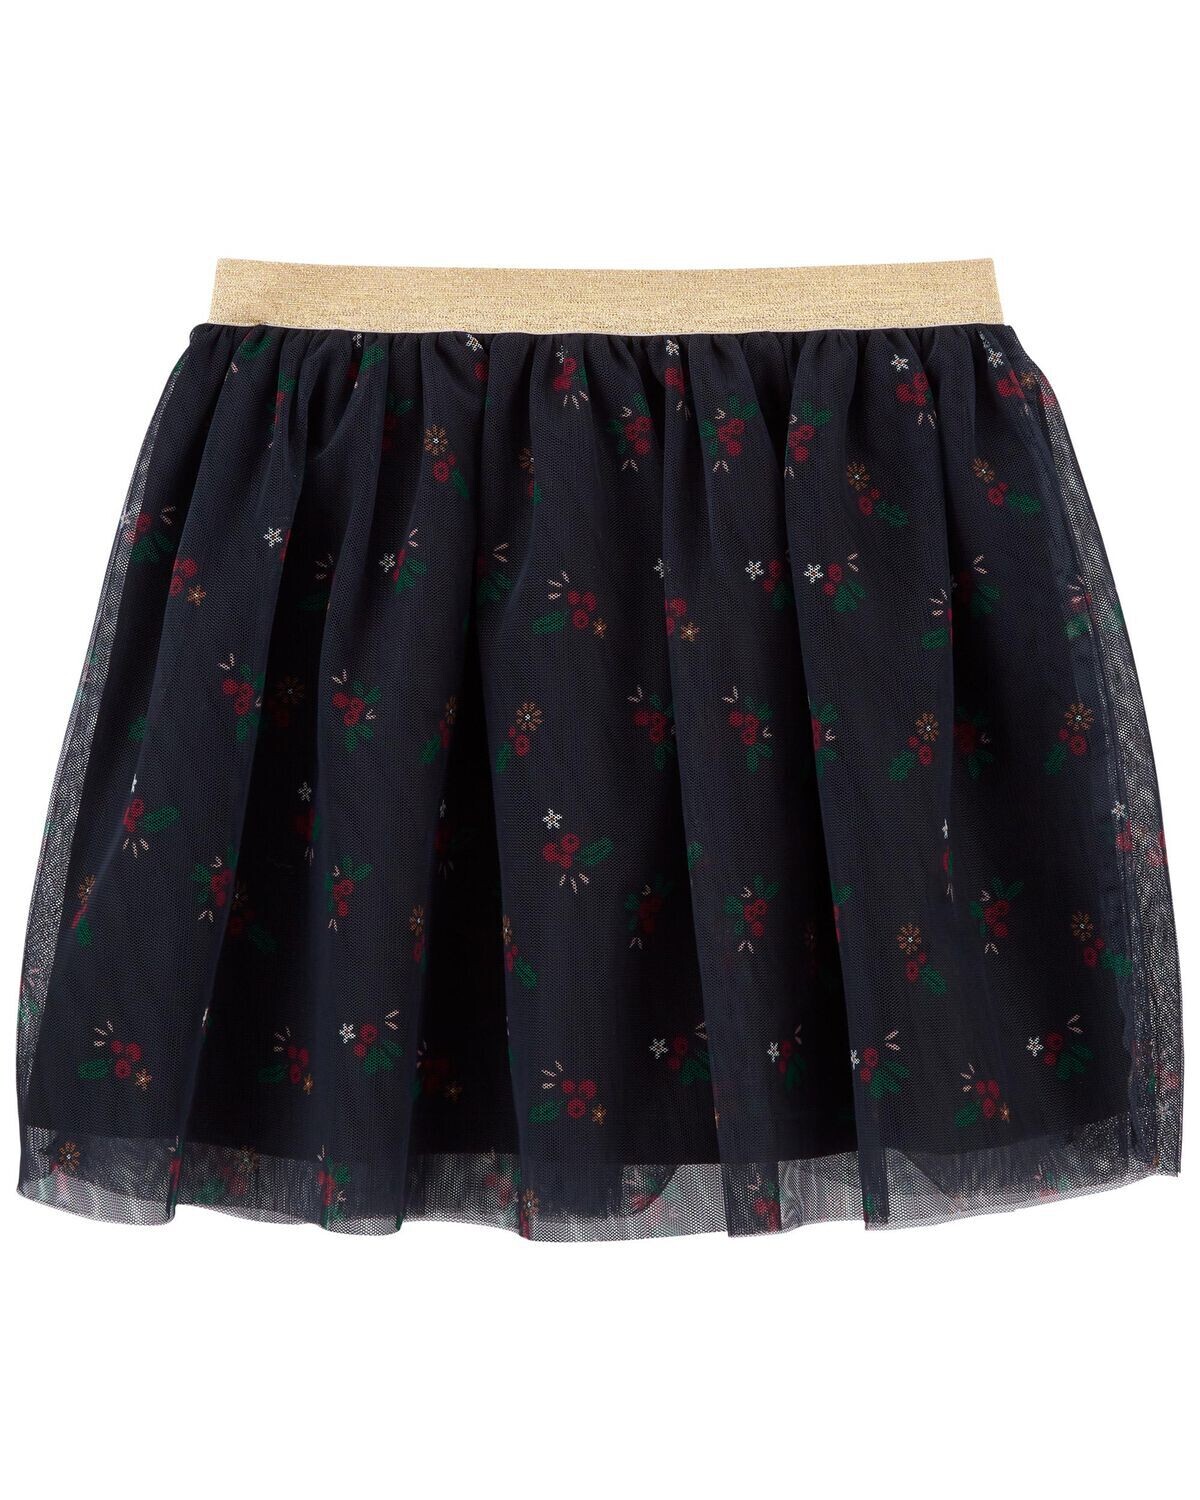 Original Carter's Girls Tutu Skirt